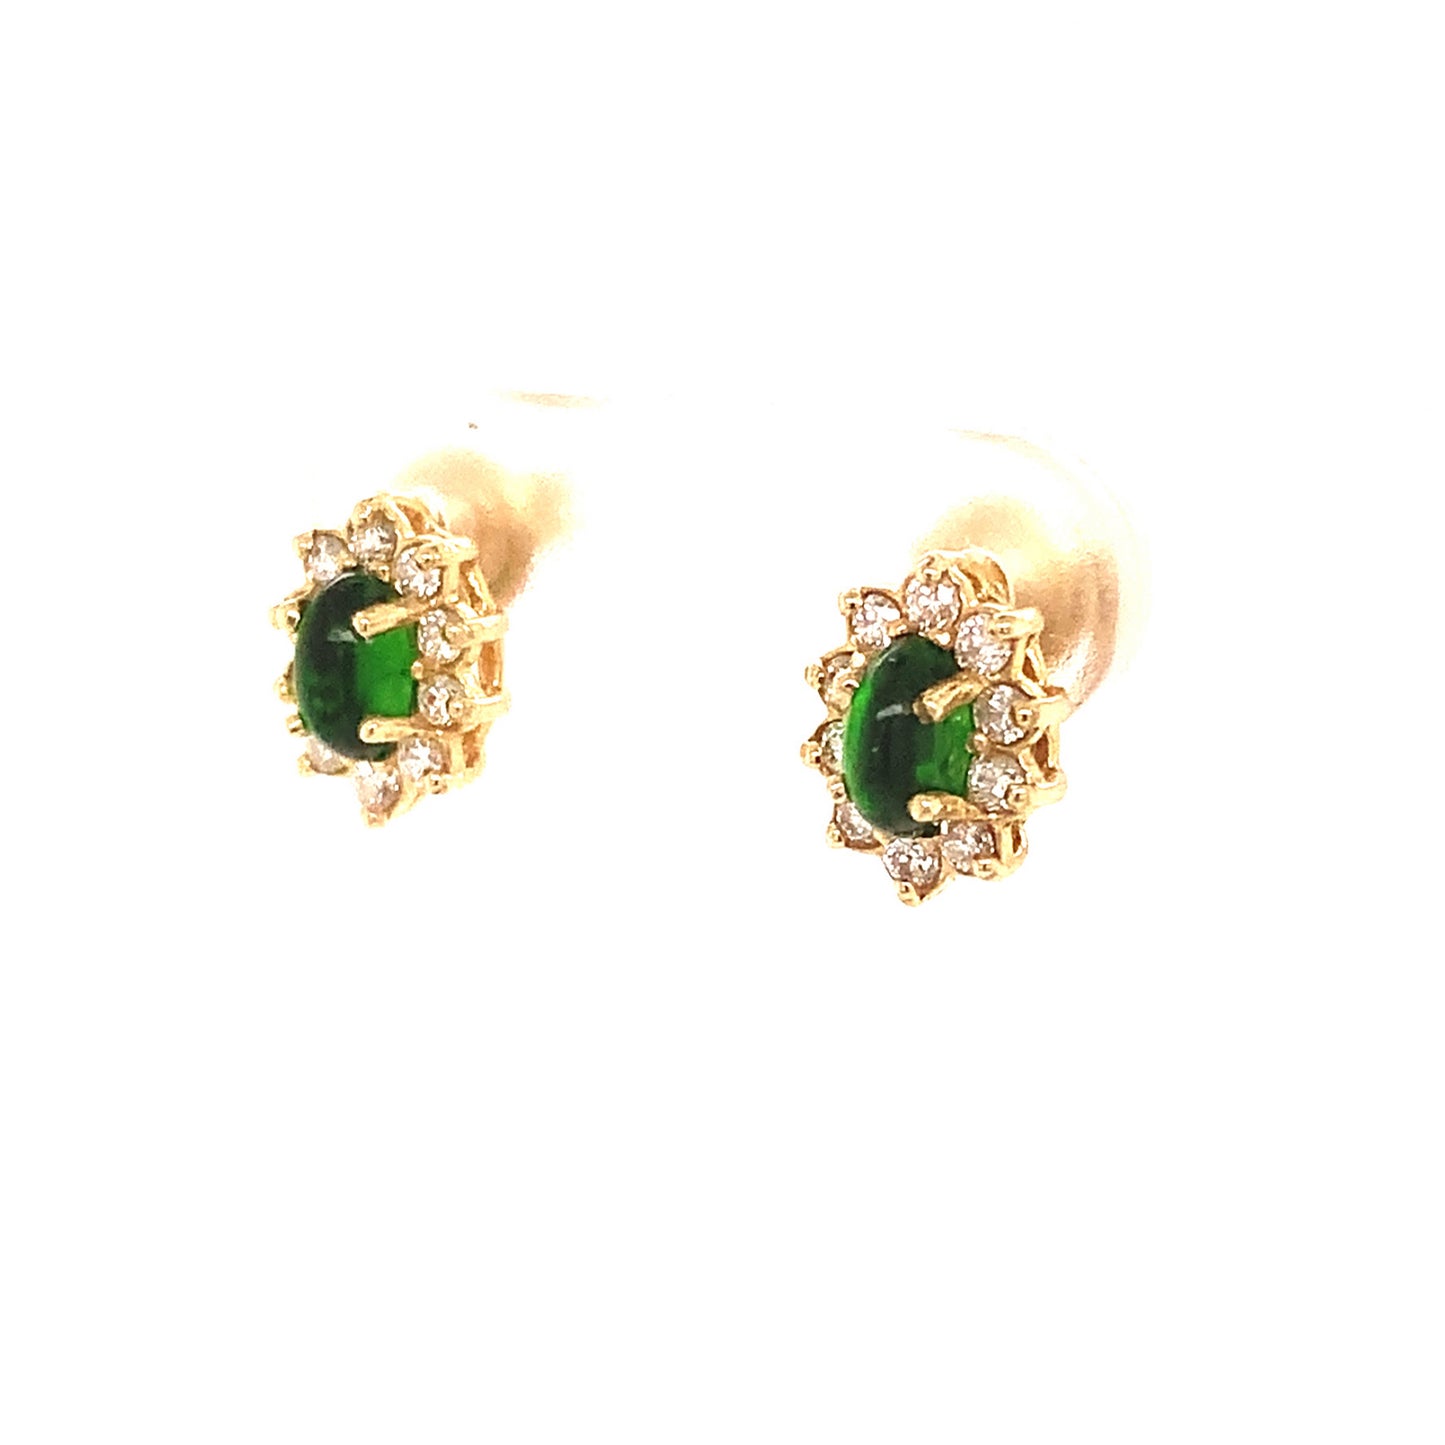 Natural Tourmaline Diamond Earrings 14k Gold 0.85 TCW Certified $1,250 113472 - Certified Estate Jewelry